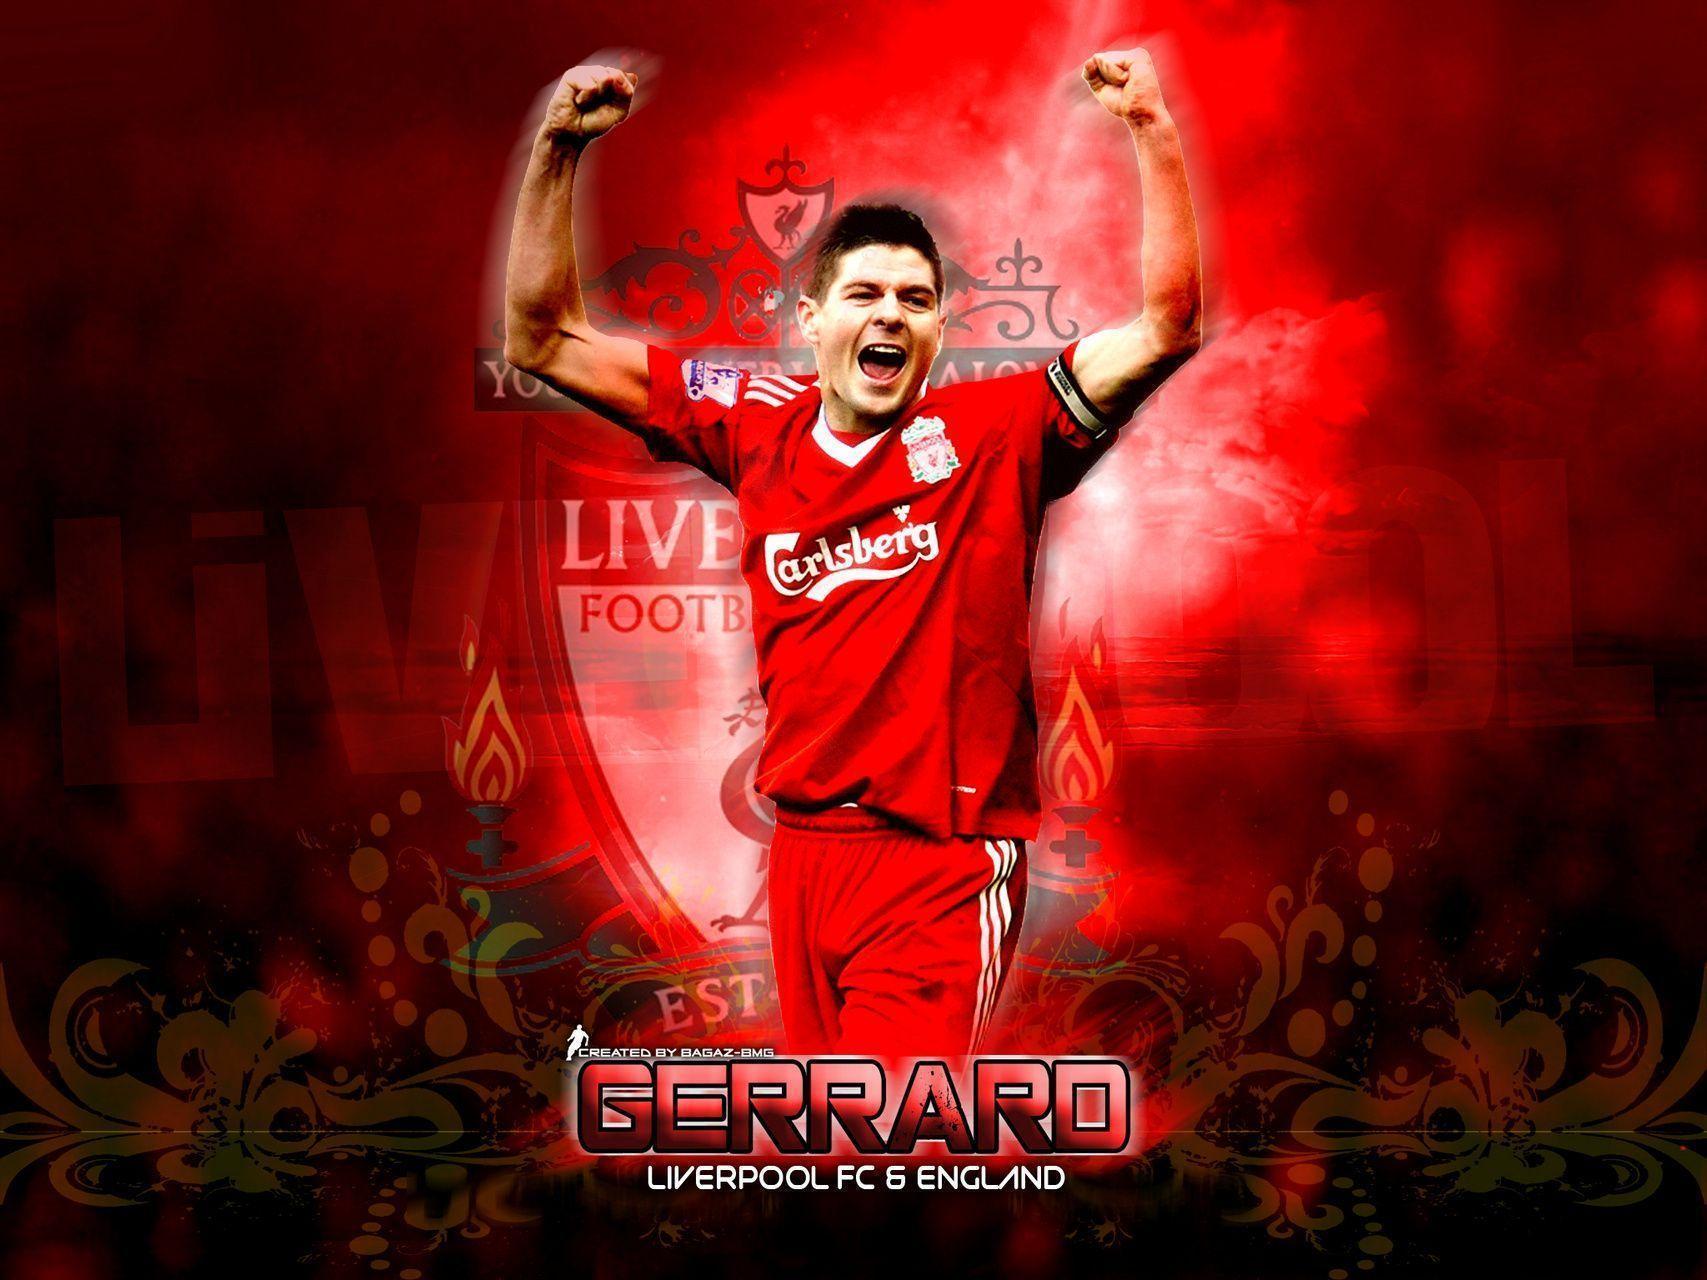 Steven Gerrard Liverpool Captain Background Wallpaper. Background